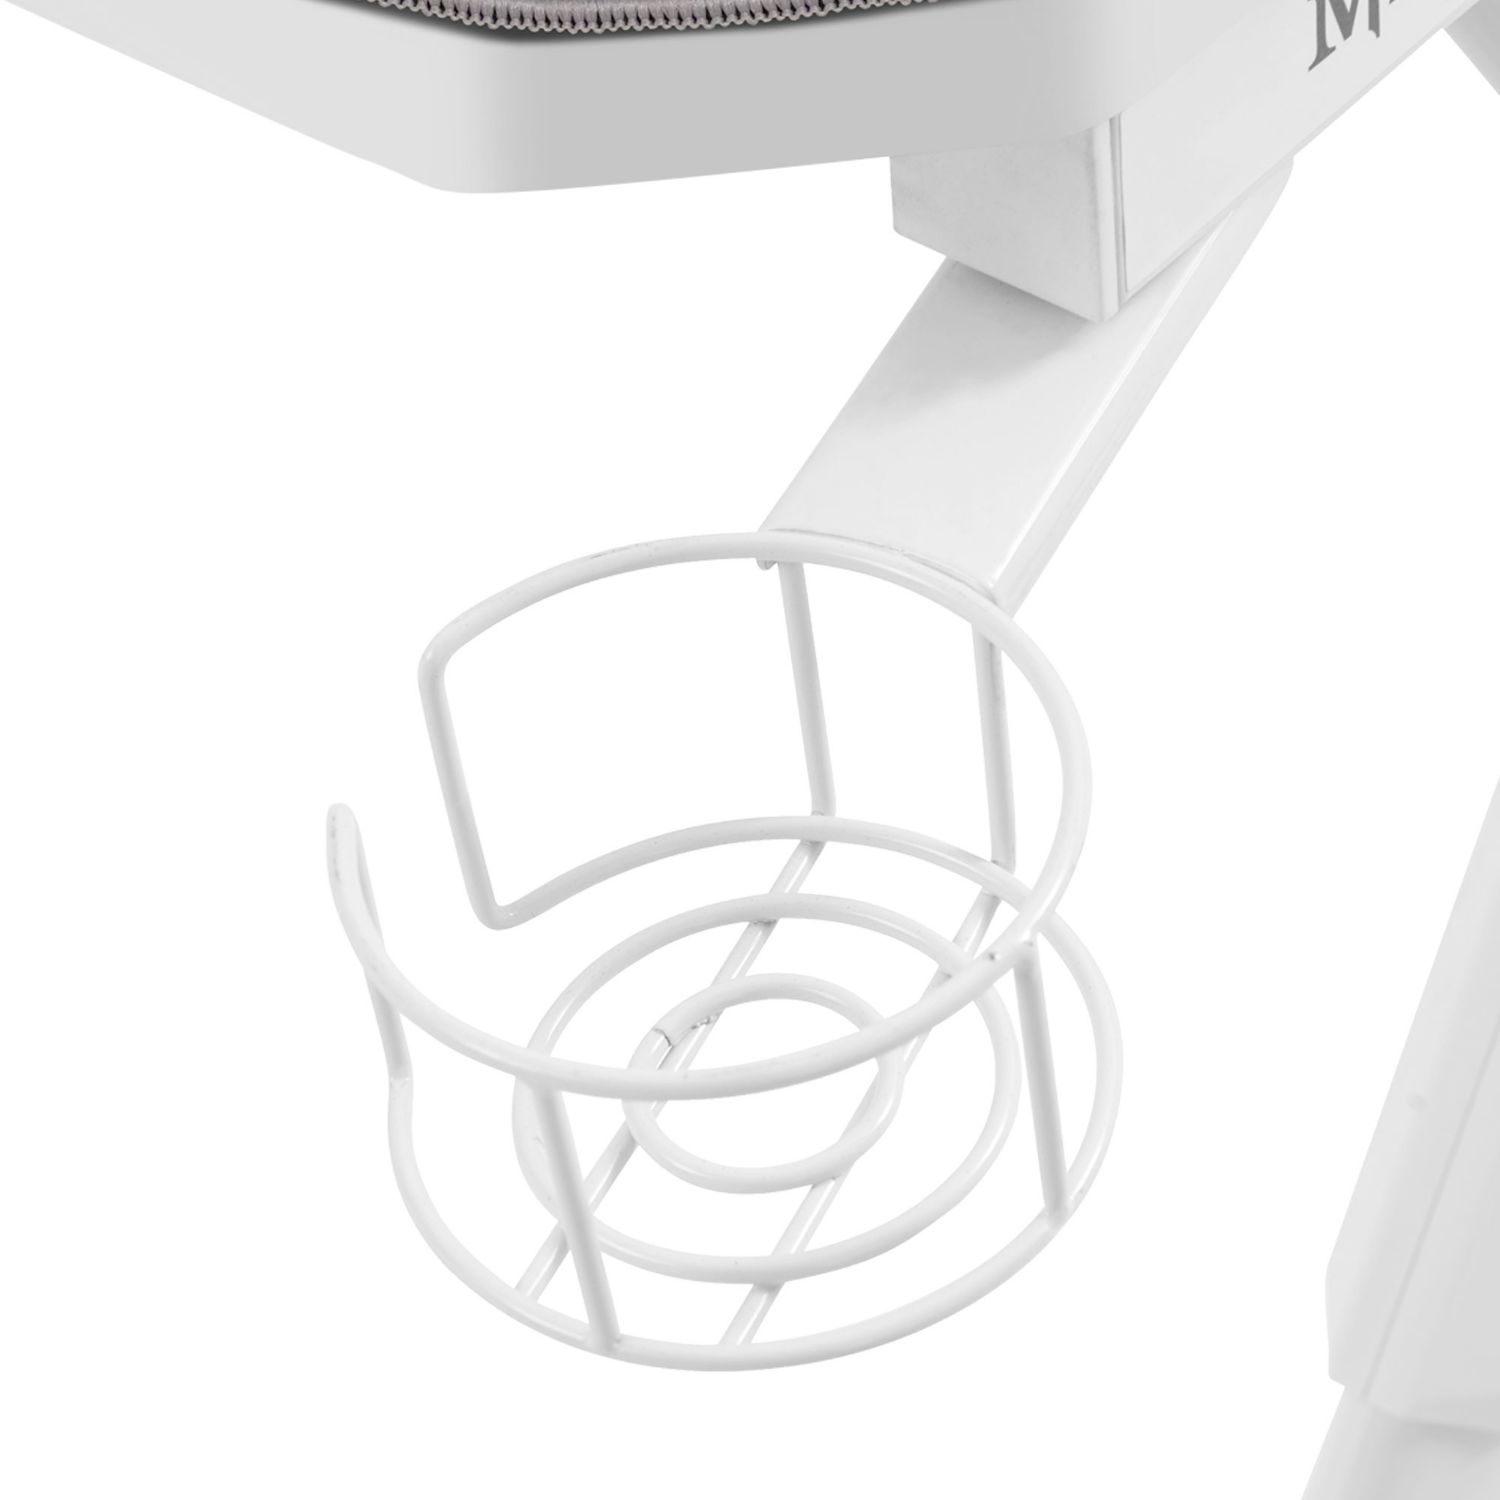 MGDXLW - Mesa Mars Gaming Rectangular Pasacables Gancho para Auriculares Gestin de Cables 160x75x60cm Mximo 100kg Blanca (MGDXLW)